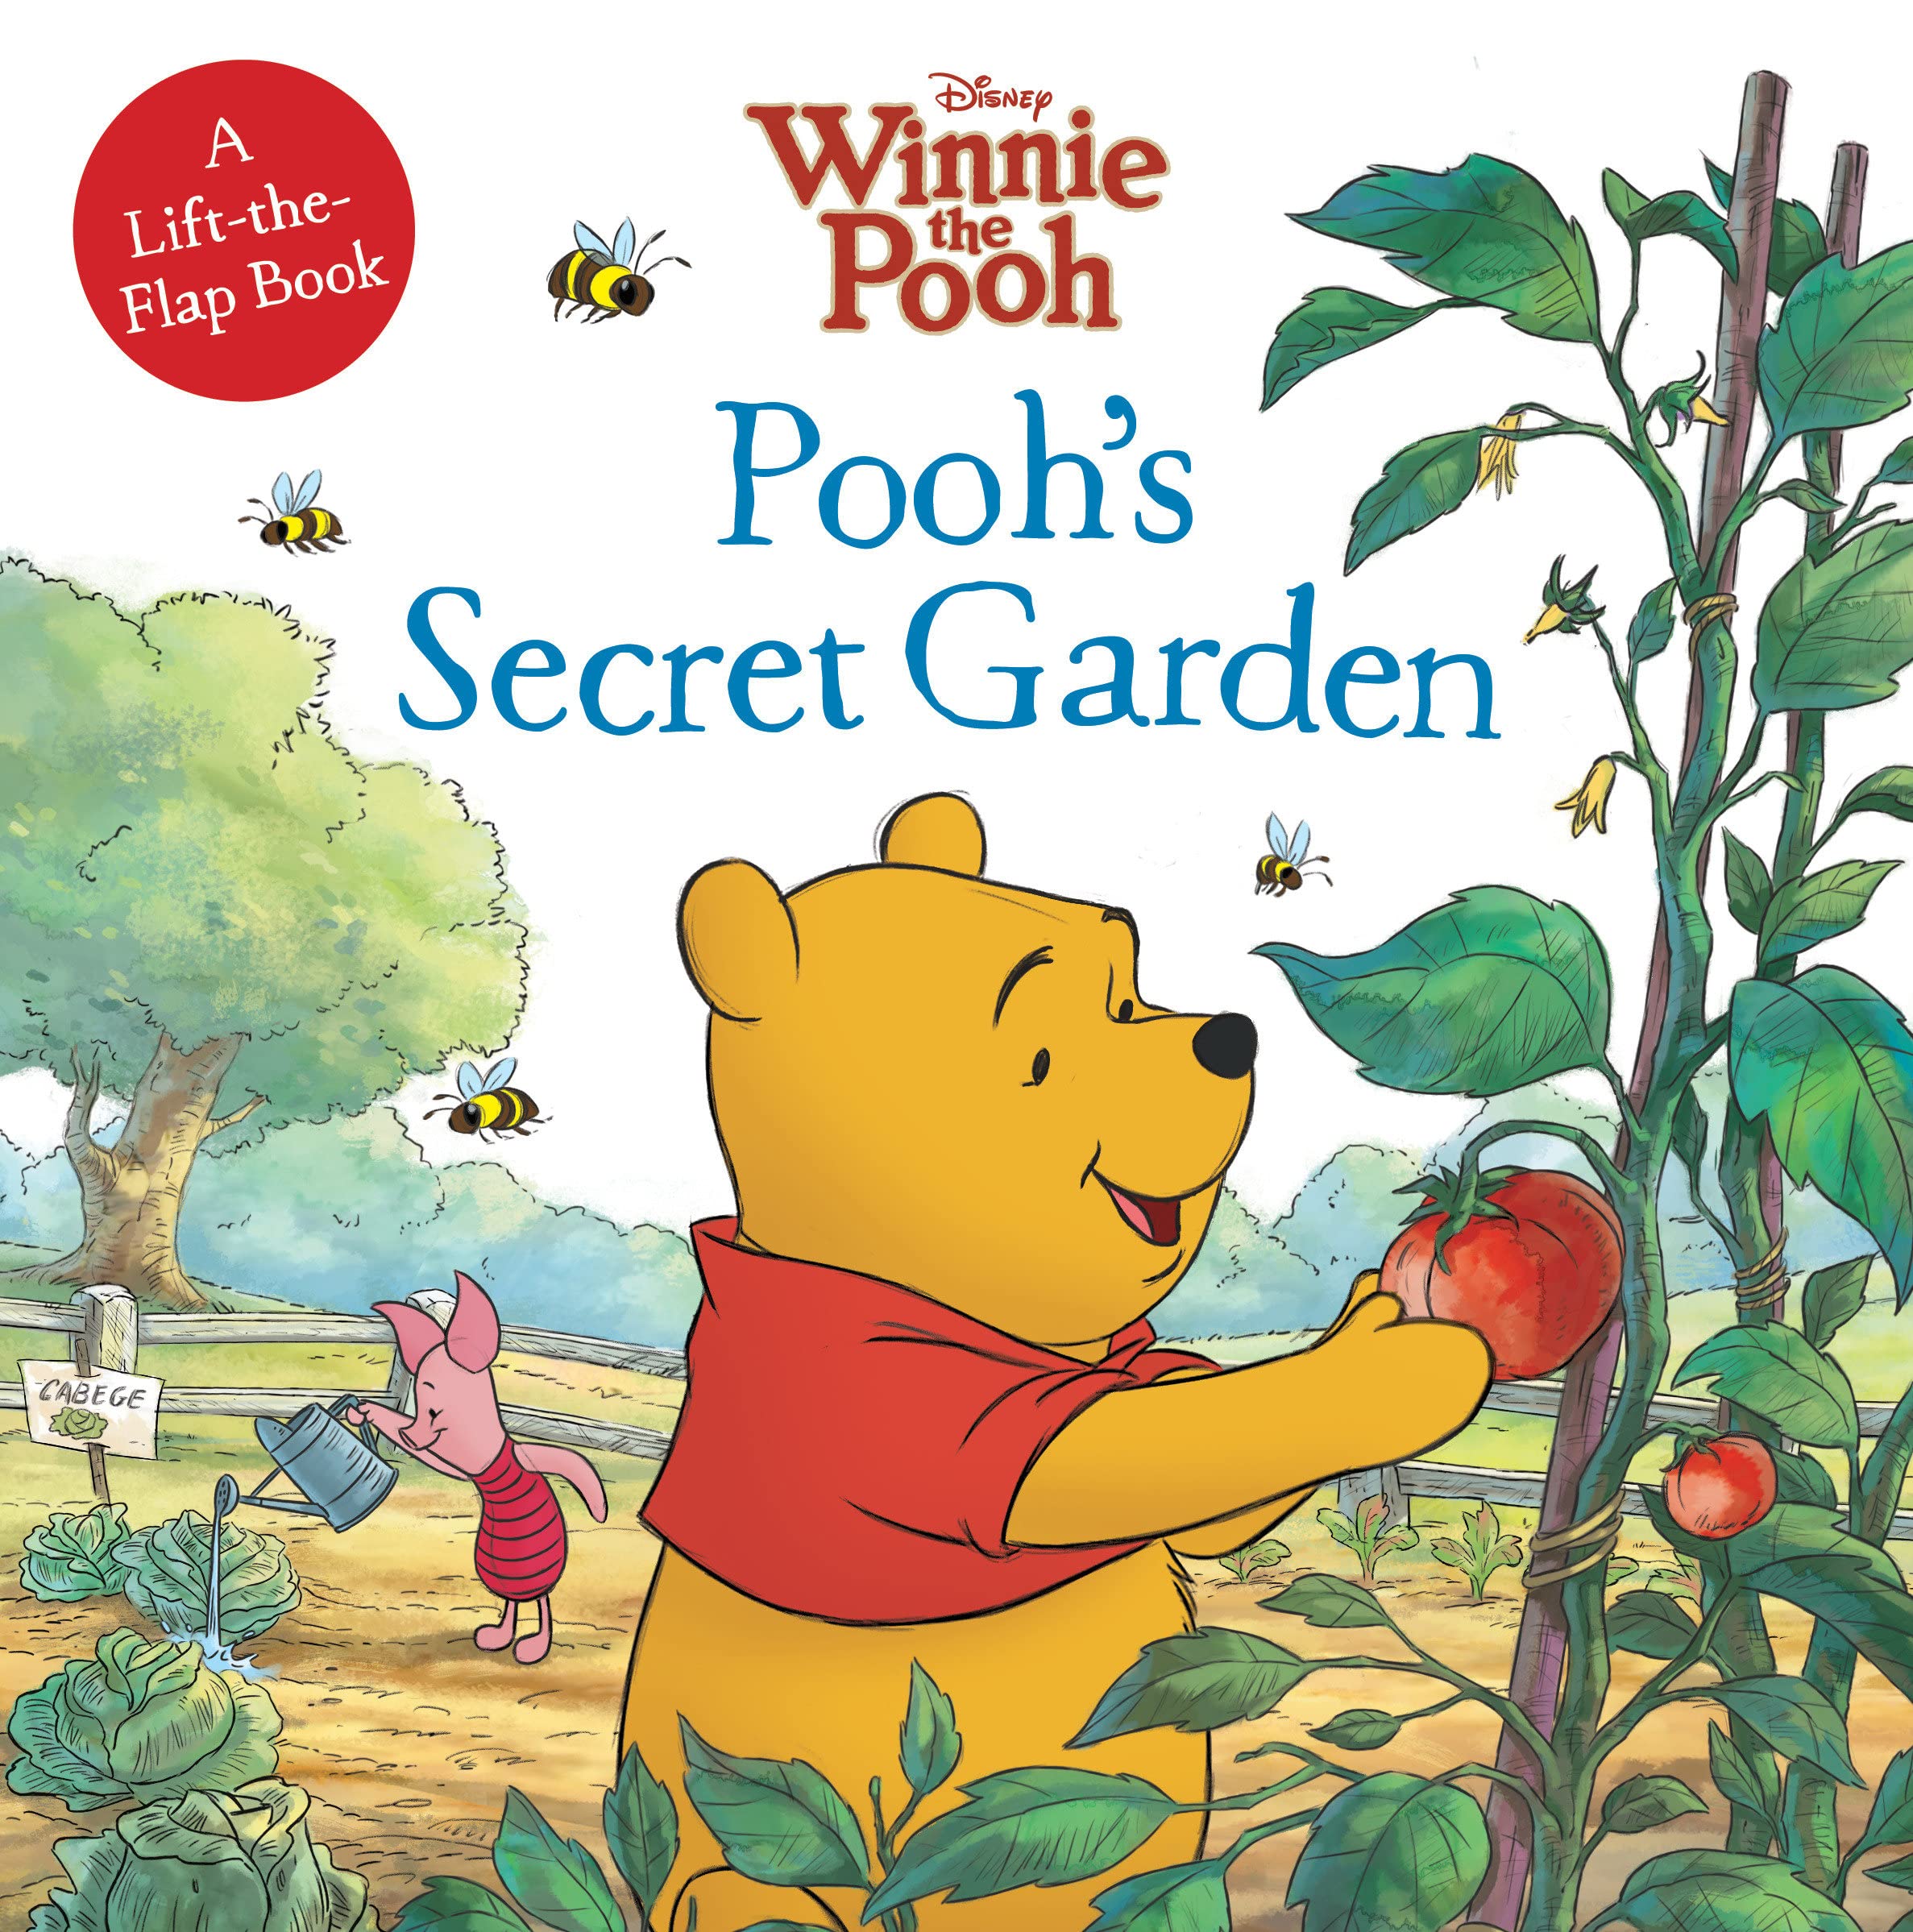 Winnie the Pooh: Pooh's Secret Garden (Disney's Winnie the Pooh)